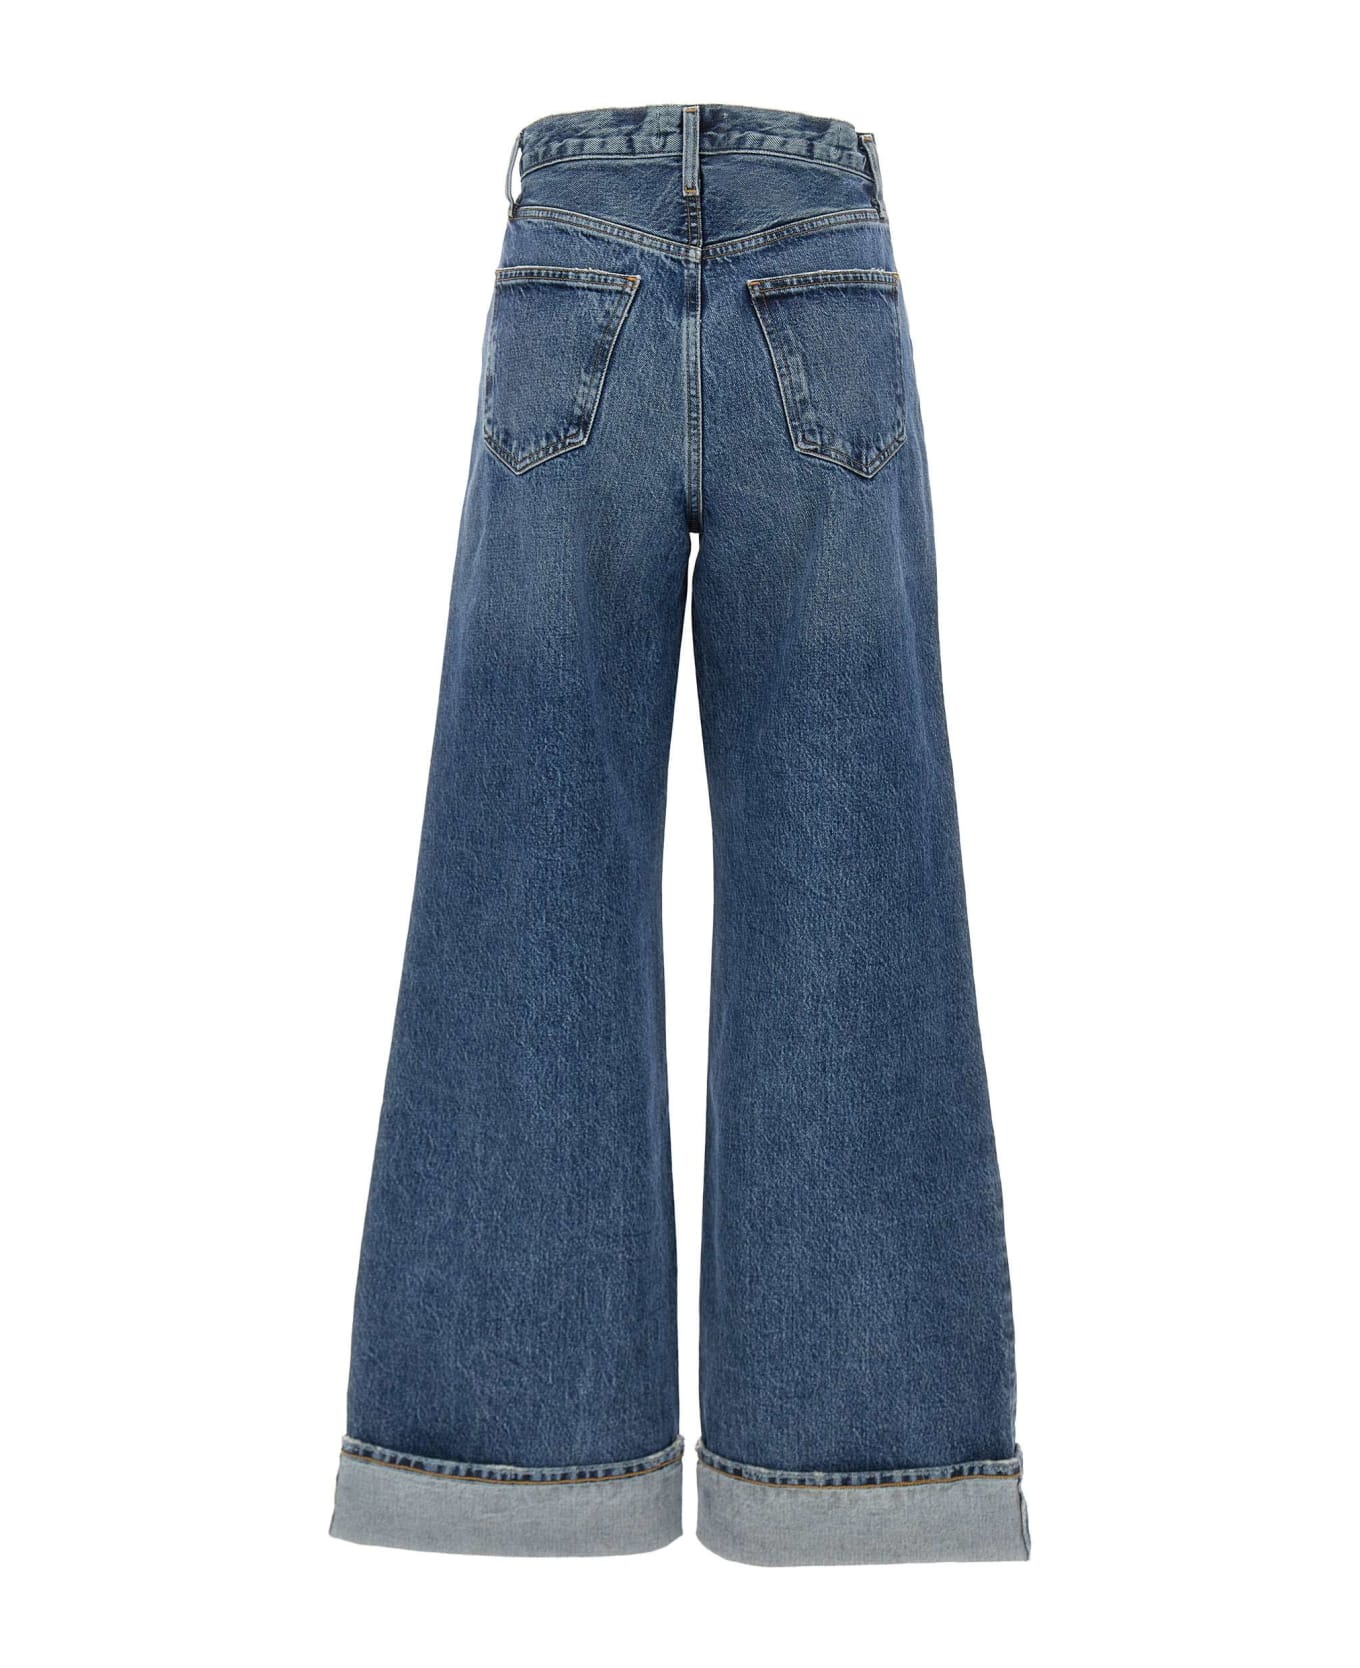 AGOLDE "dame Jean" Organic Cotton Jeans - BLUE